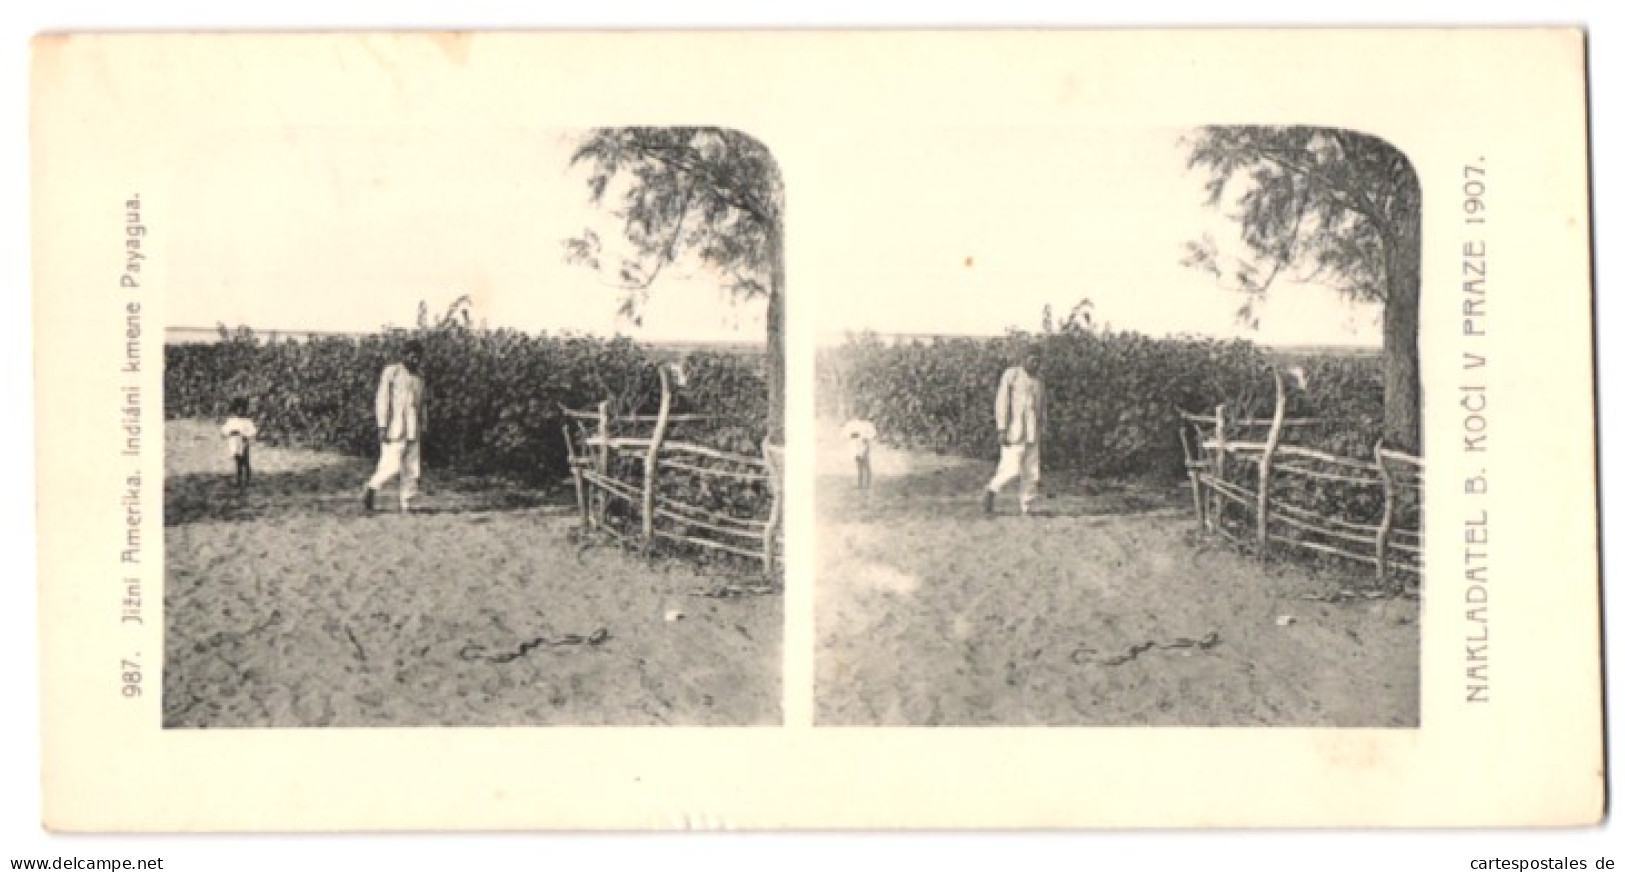 Stereo-Fotografie Lichtdruck Bedrich Koci, Prag, Ansicht Payagua, Südamerika 1907, Jizni Amerika, Indiani Kmene  - Stereoscopic